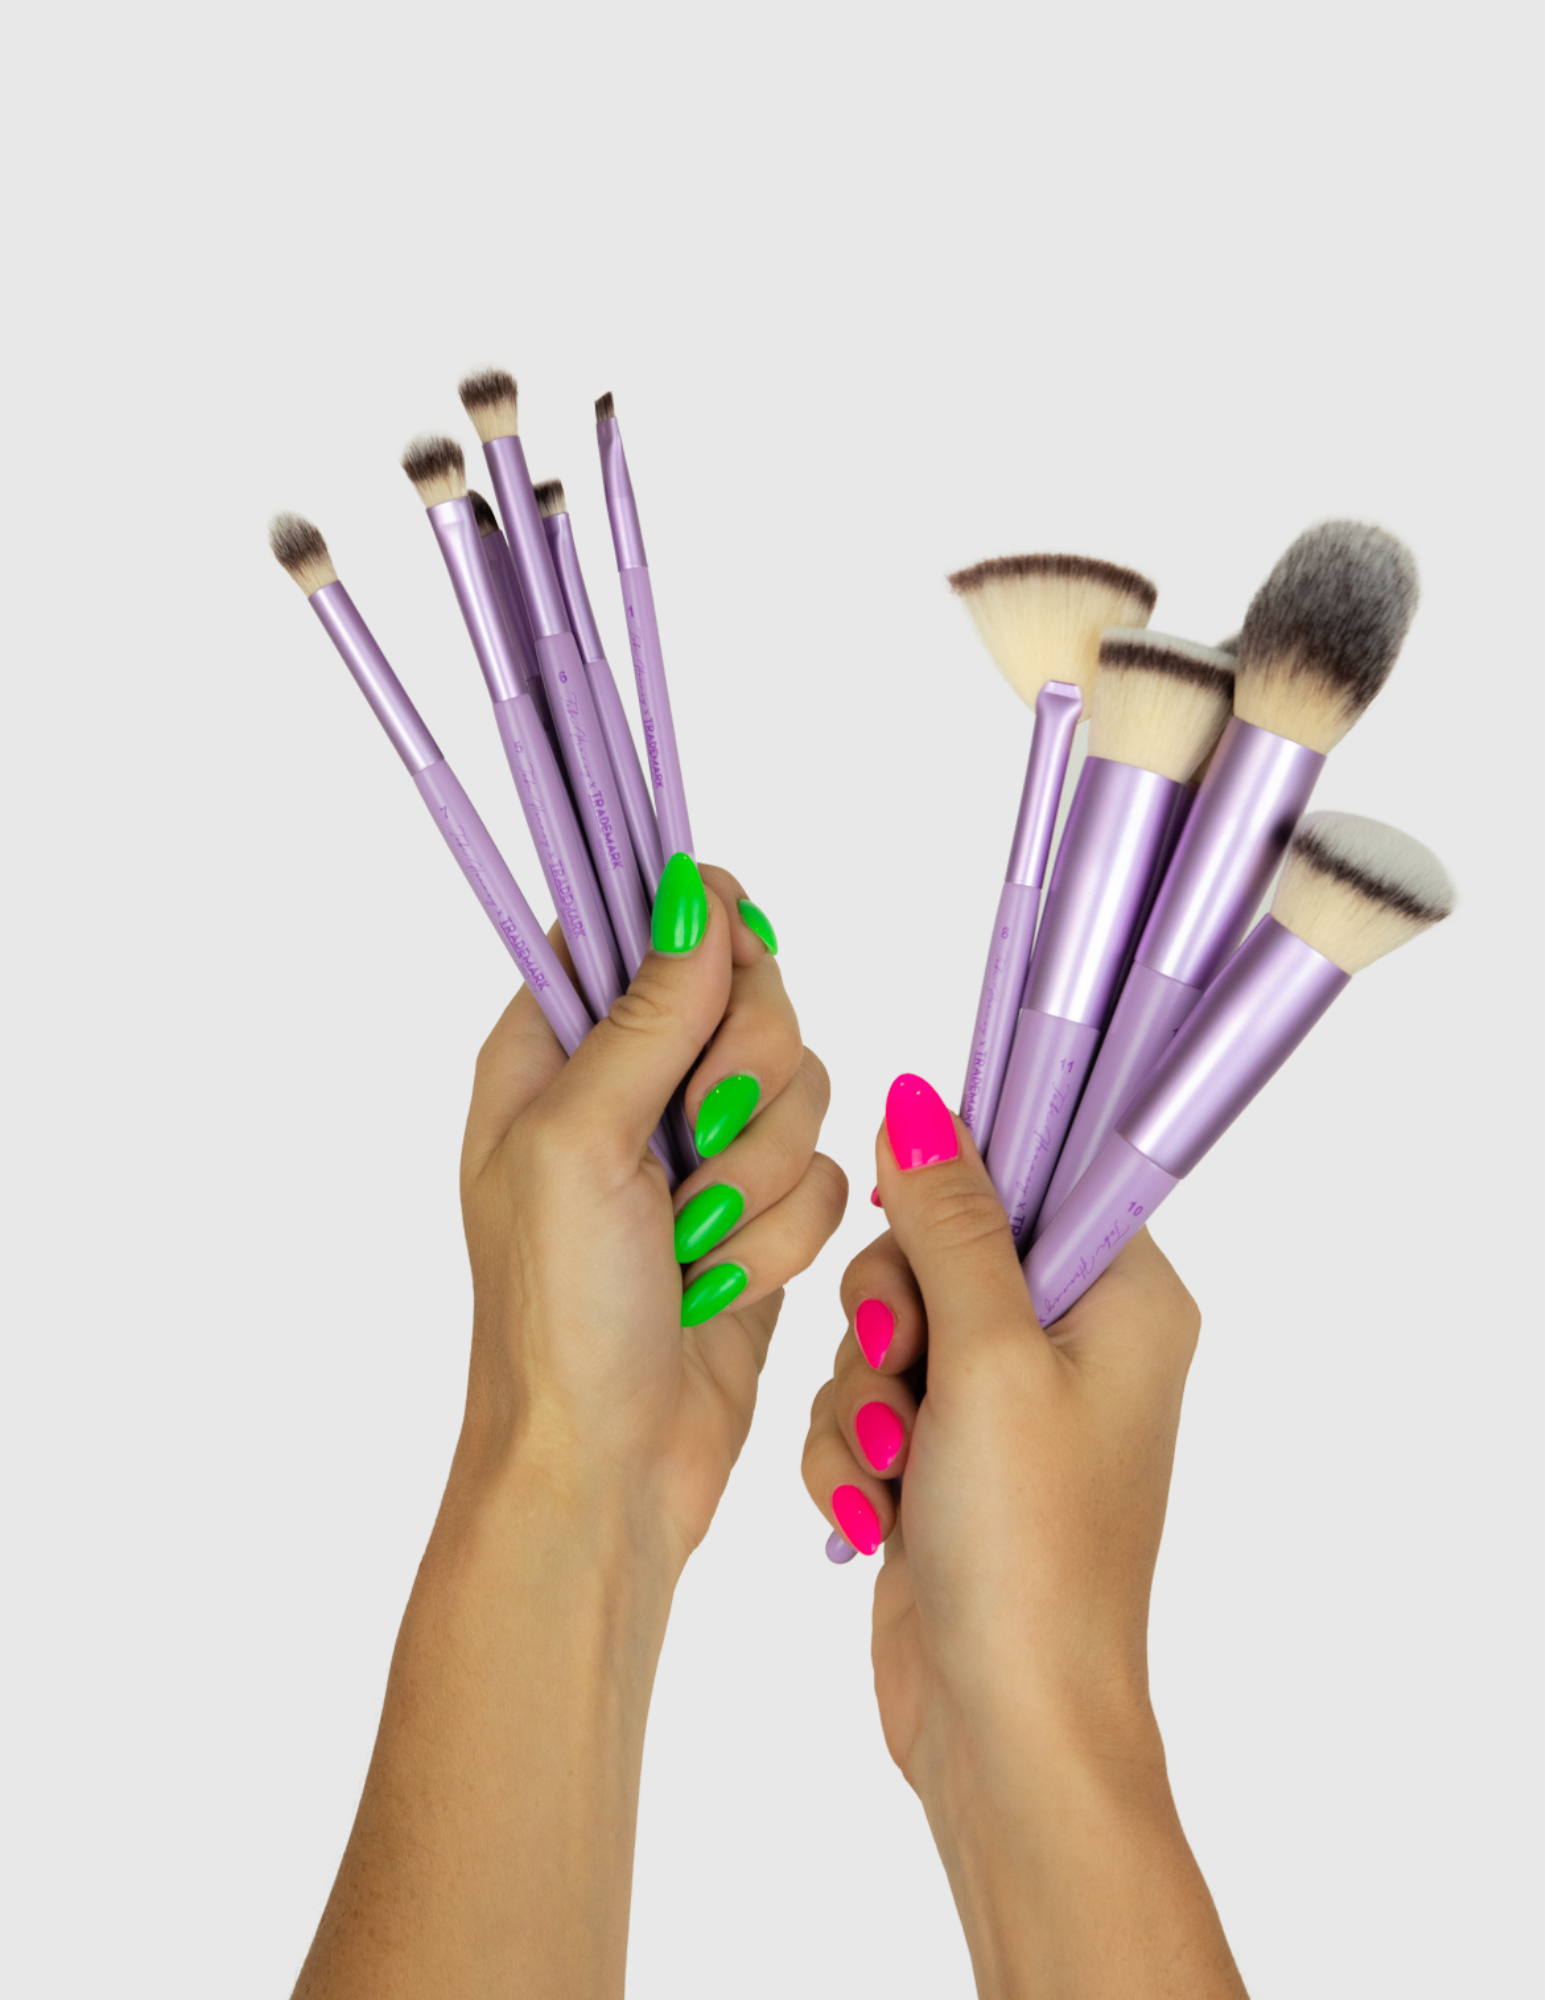 The Essentials Make-Up Brush Collection Tobi Henney